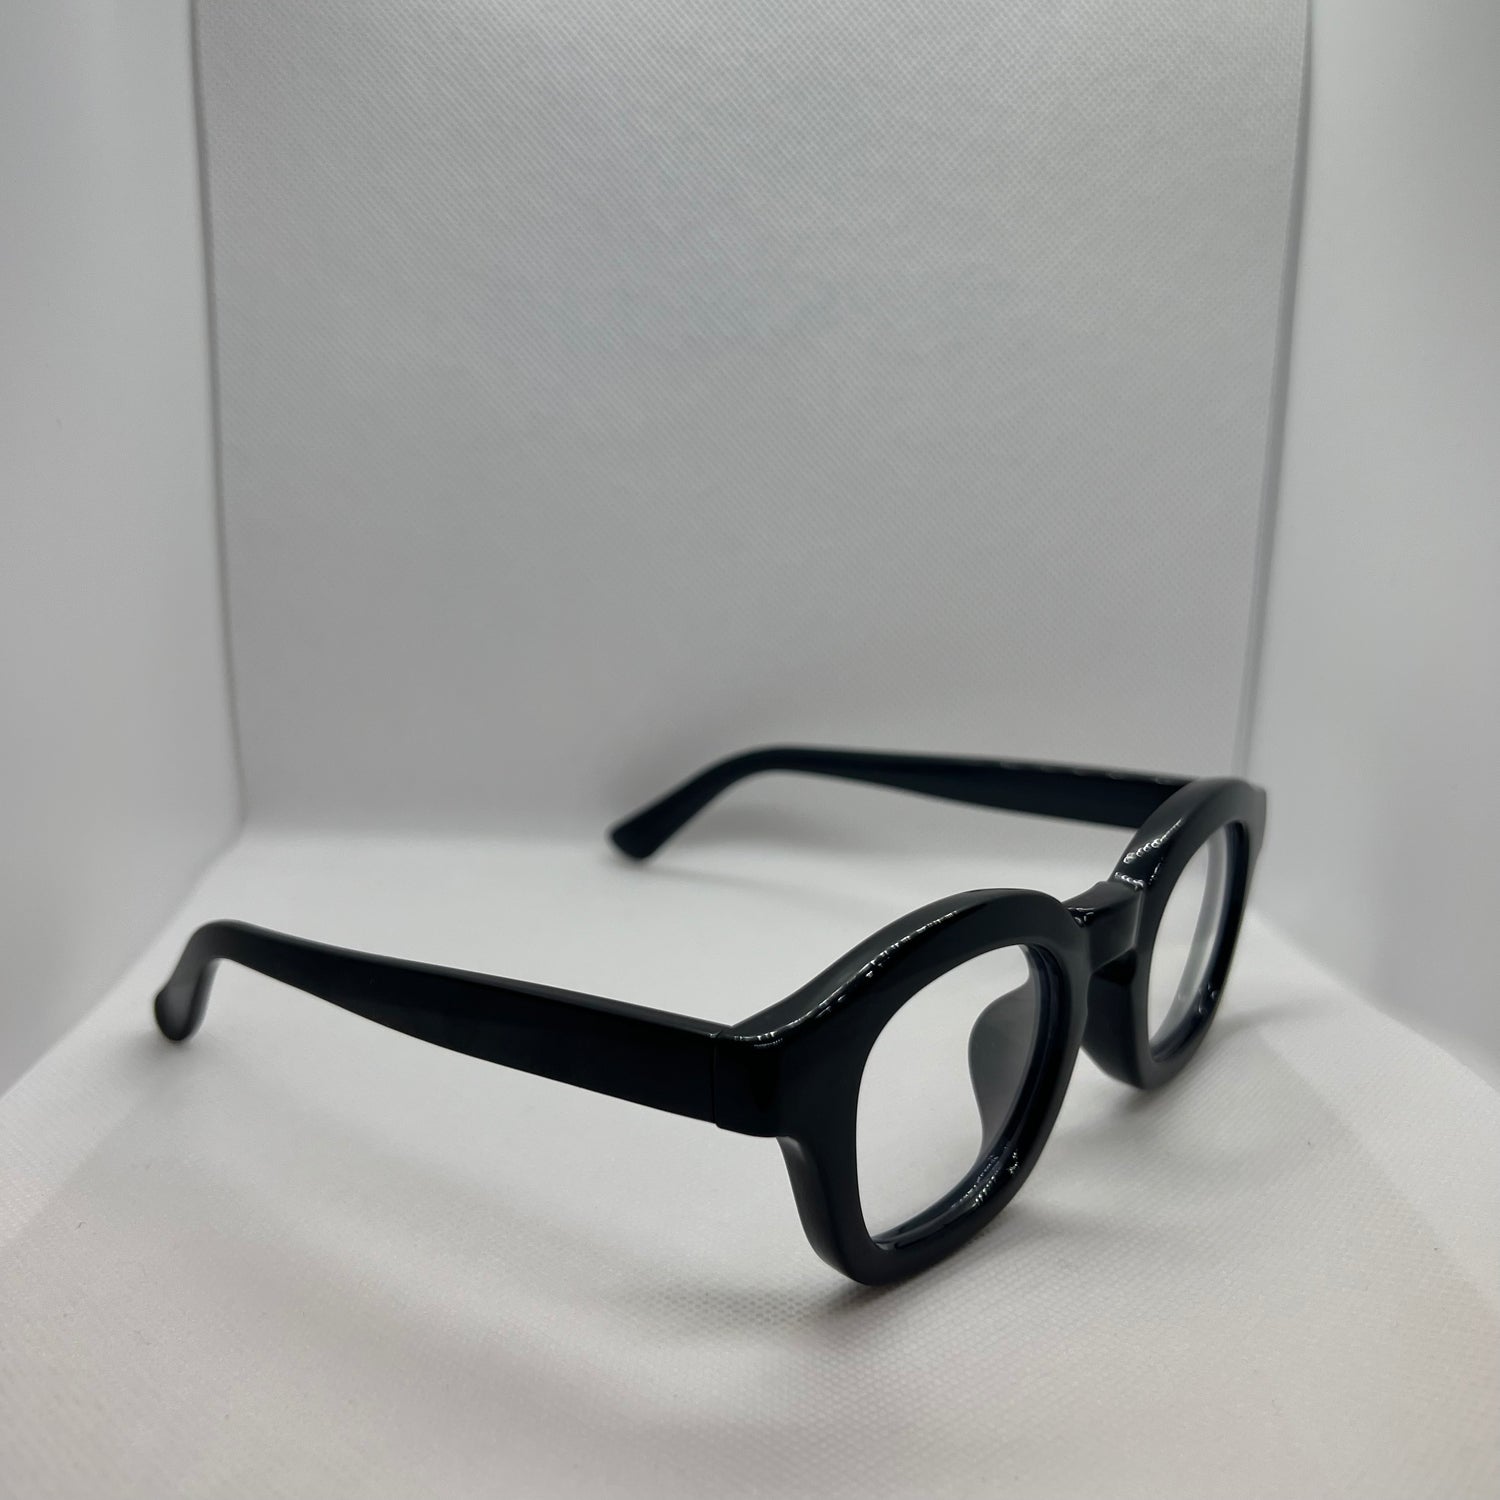 DENIS Sunglasses, anti-fog lens, BLACK FLAME